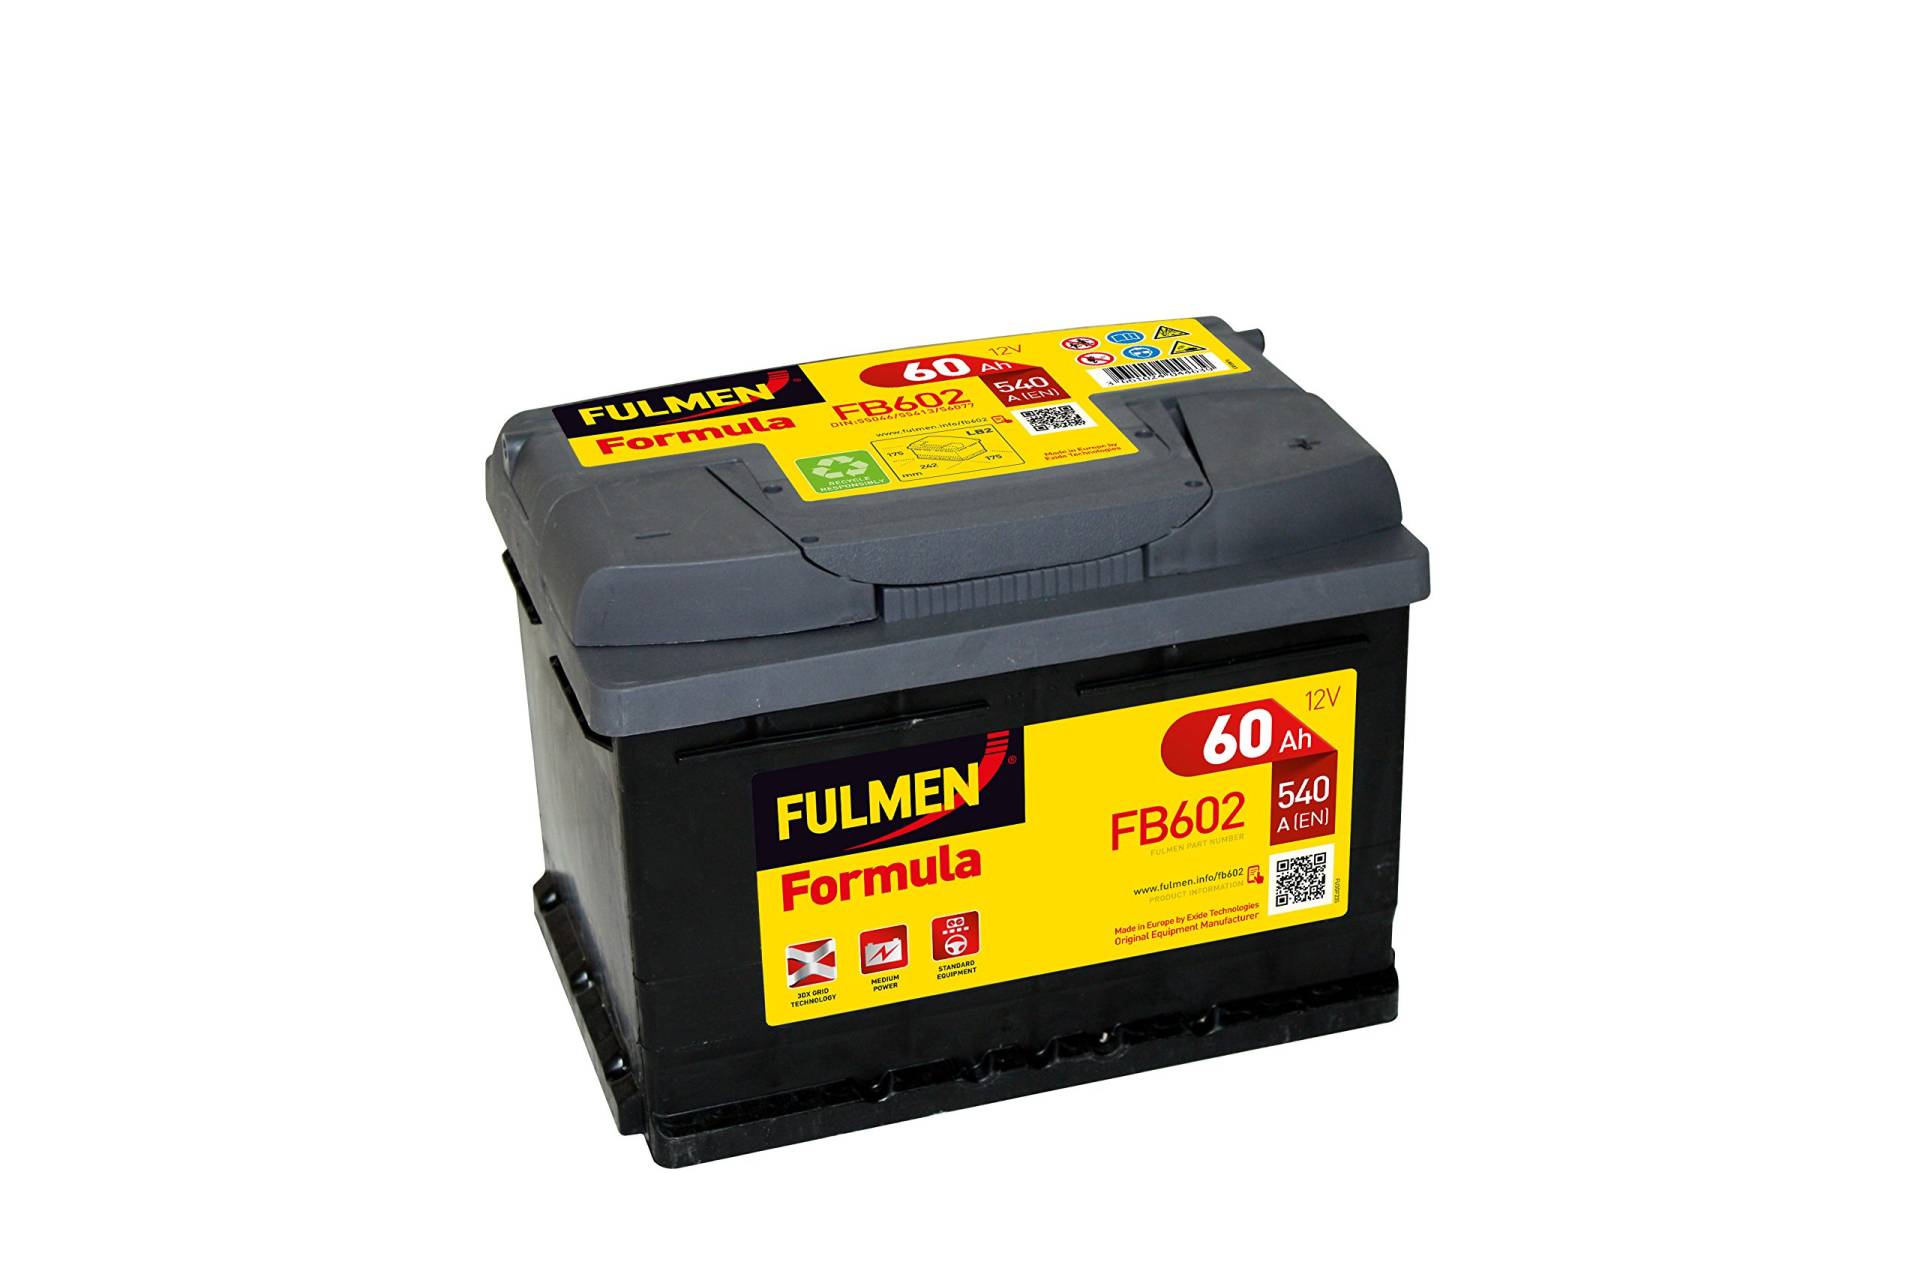 Fulmen - Autobatterie FULMEN Formula FB602 12V 60Ah 540A von Lampa